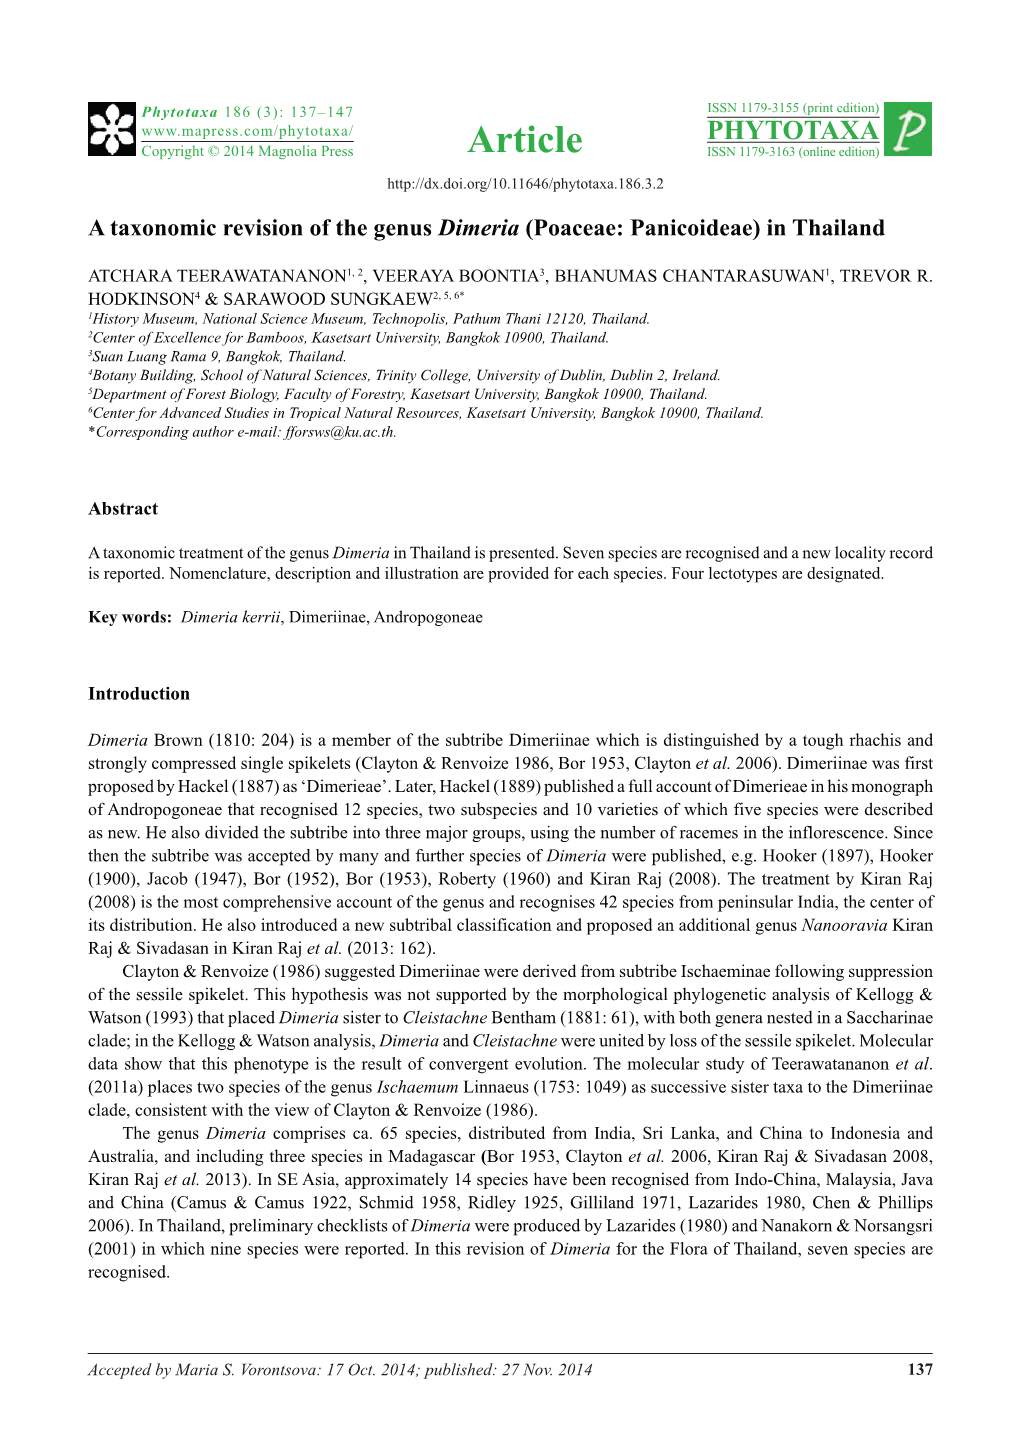 A Taxonomic Revision of the Genus Dimeria (Poaceae: Panicoideae) in Thailand